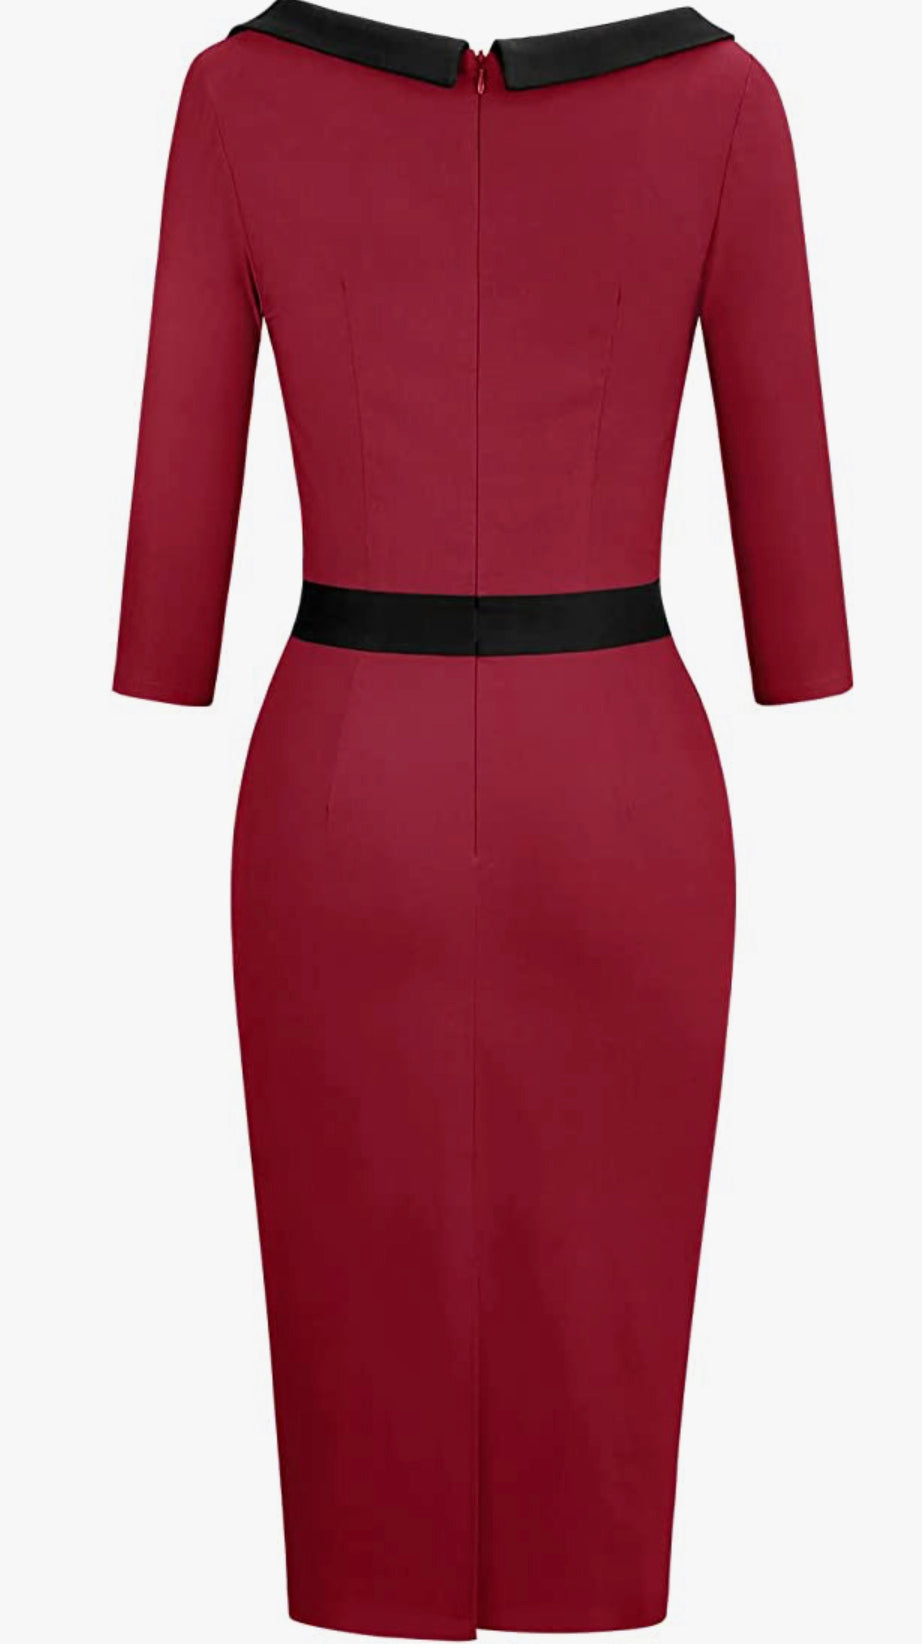 Burgundy Vintage Inspired 3/4 Sleeve BodyCon Dress Sizes Small - 2XLarge (US 4 - 18)